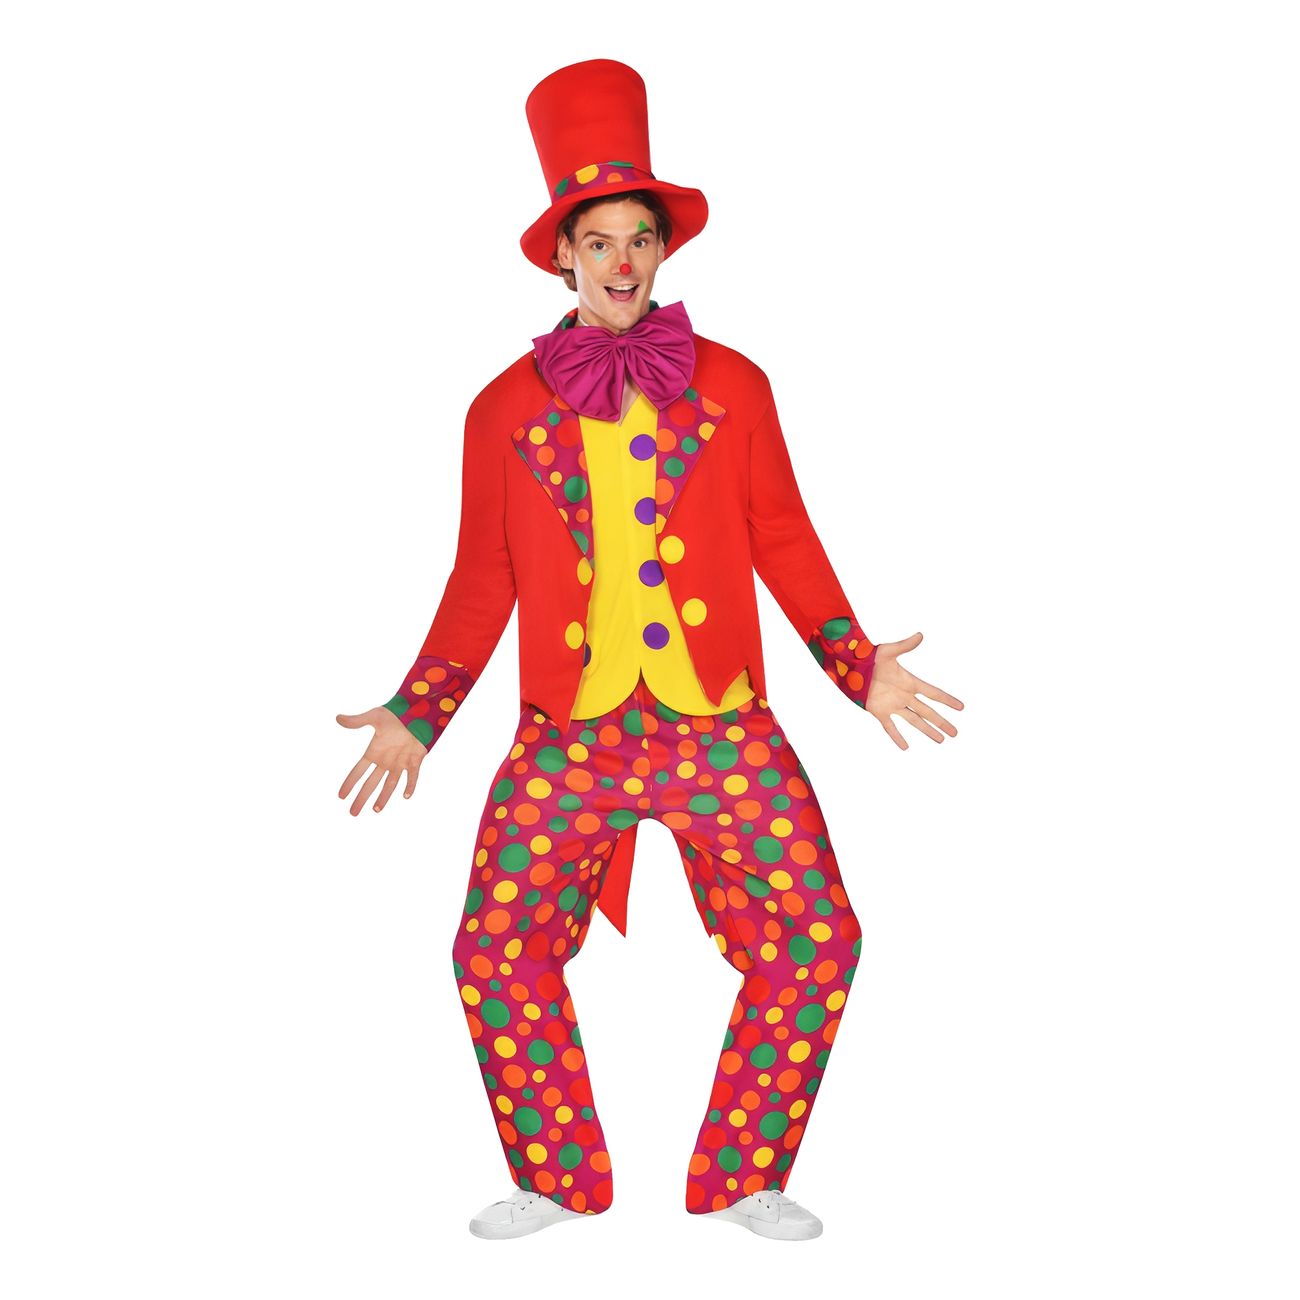 fargglad-clown-maskeraddrakt-95894-1